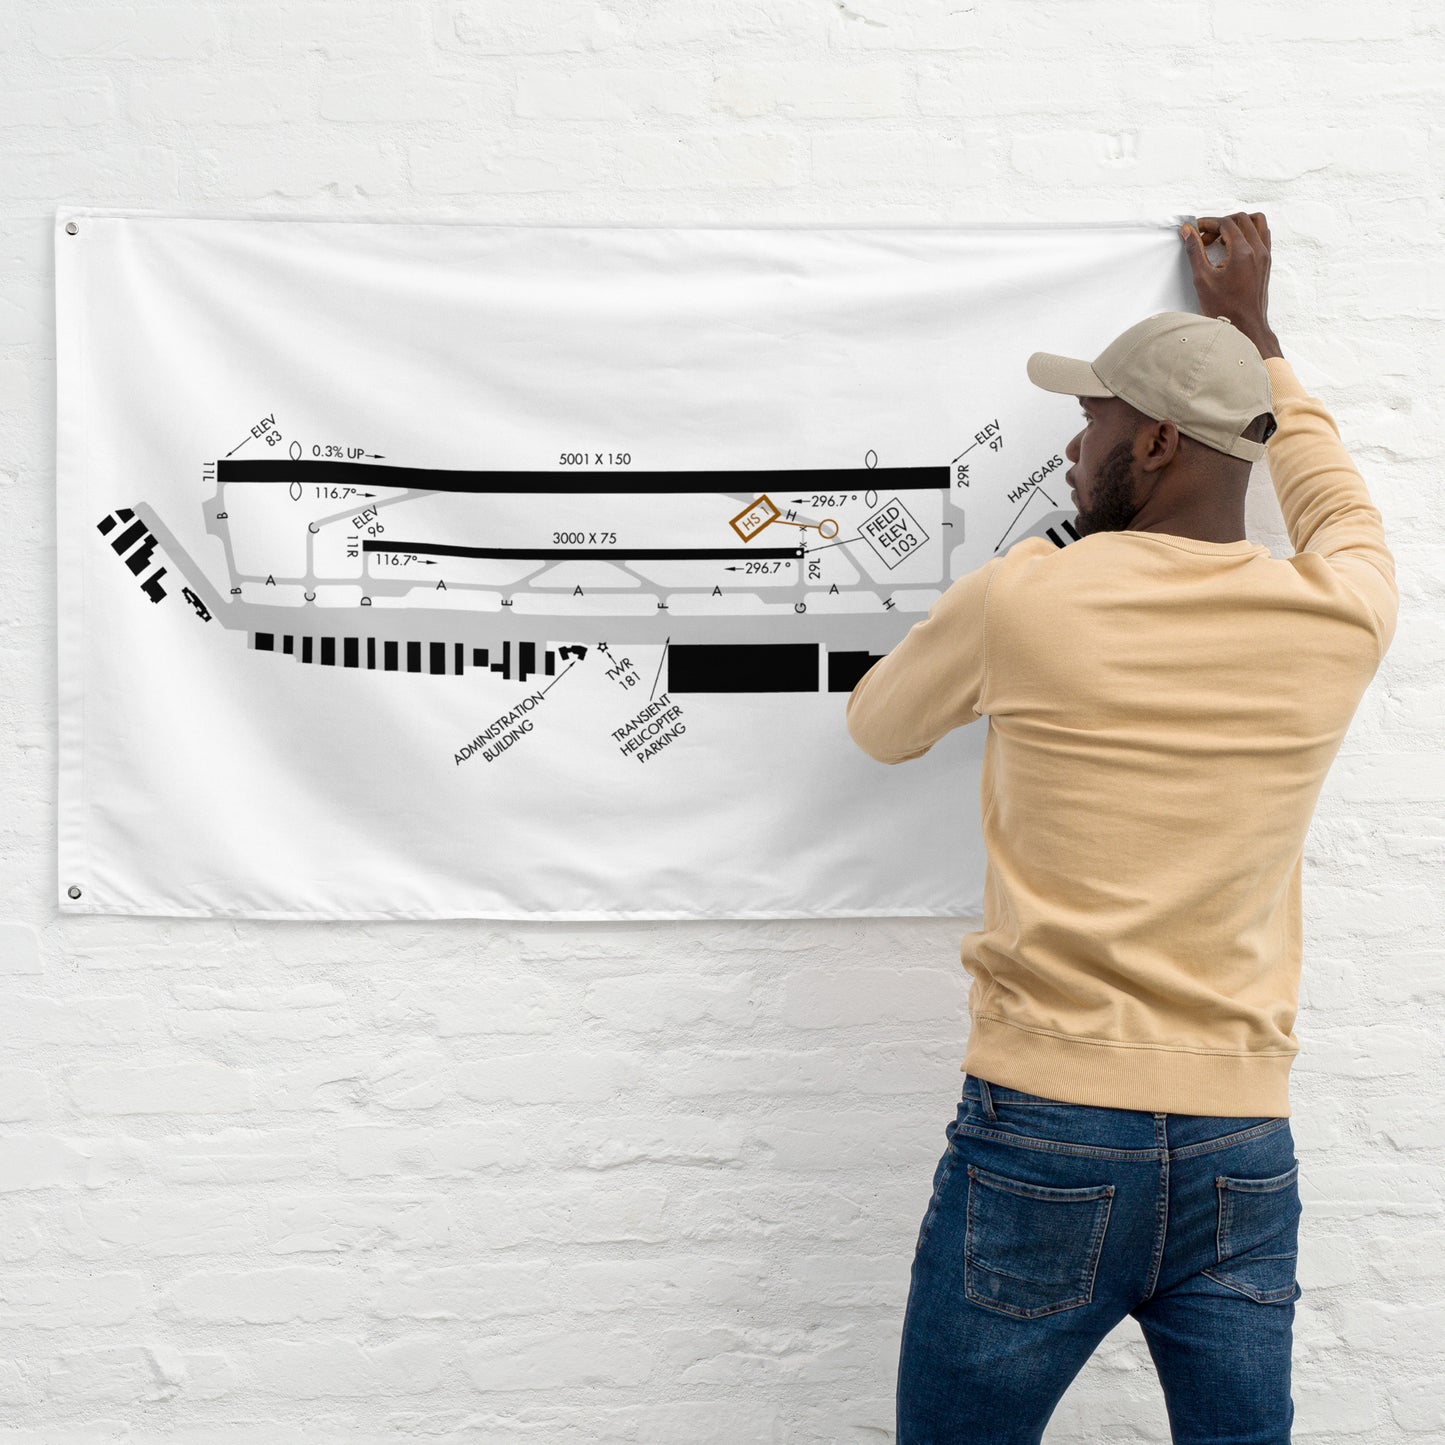 Torrance Airport taxi diagram - flag